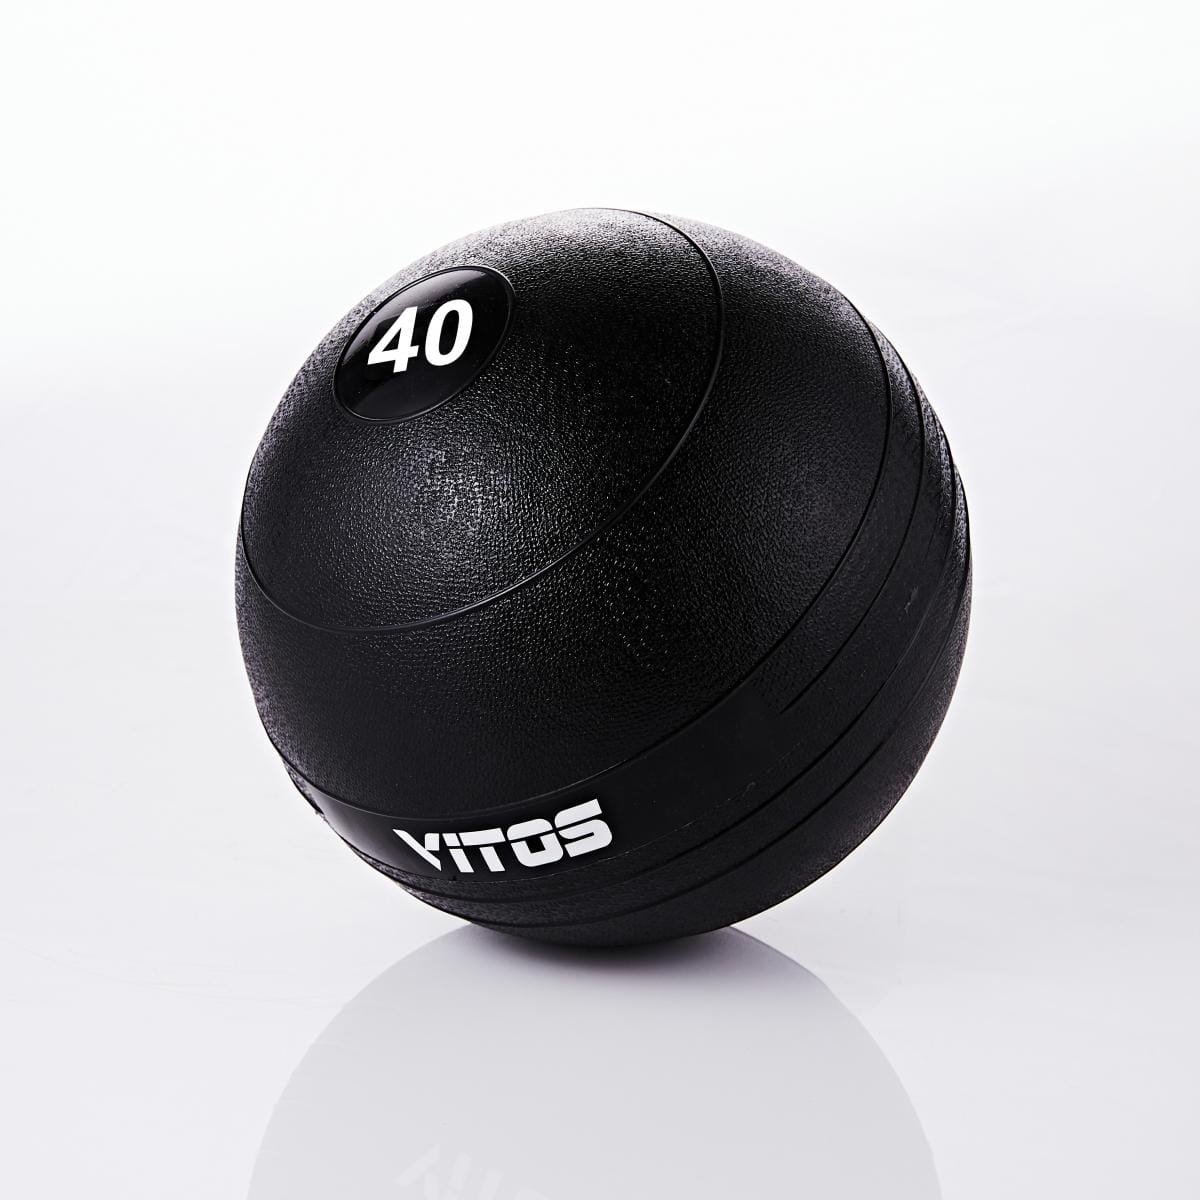 VITOS 重力球 40磅 18公斤 0